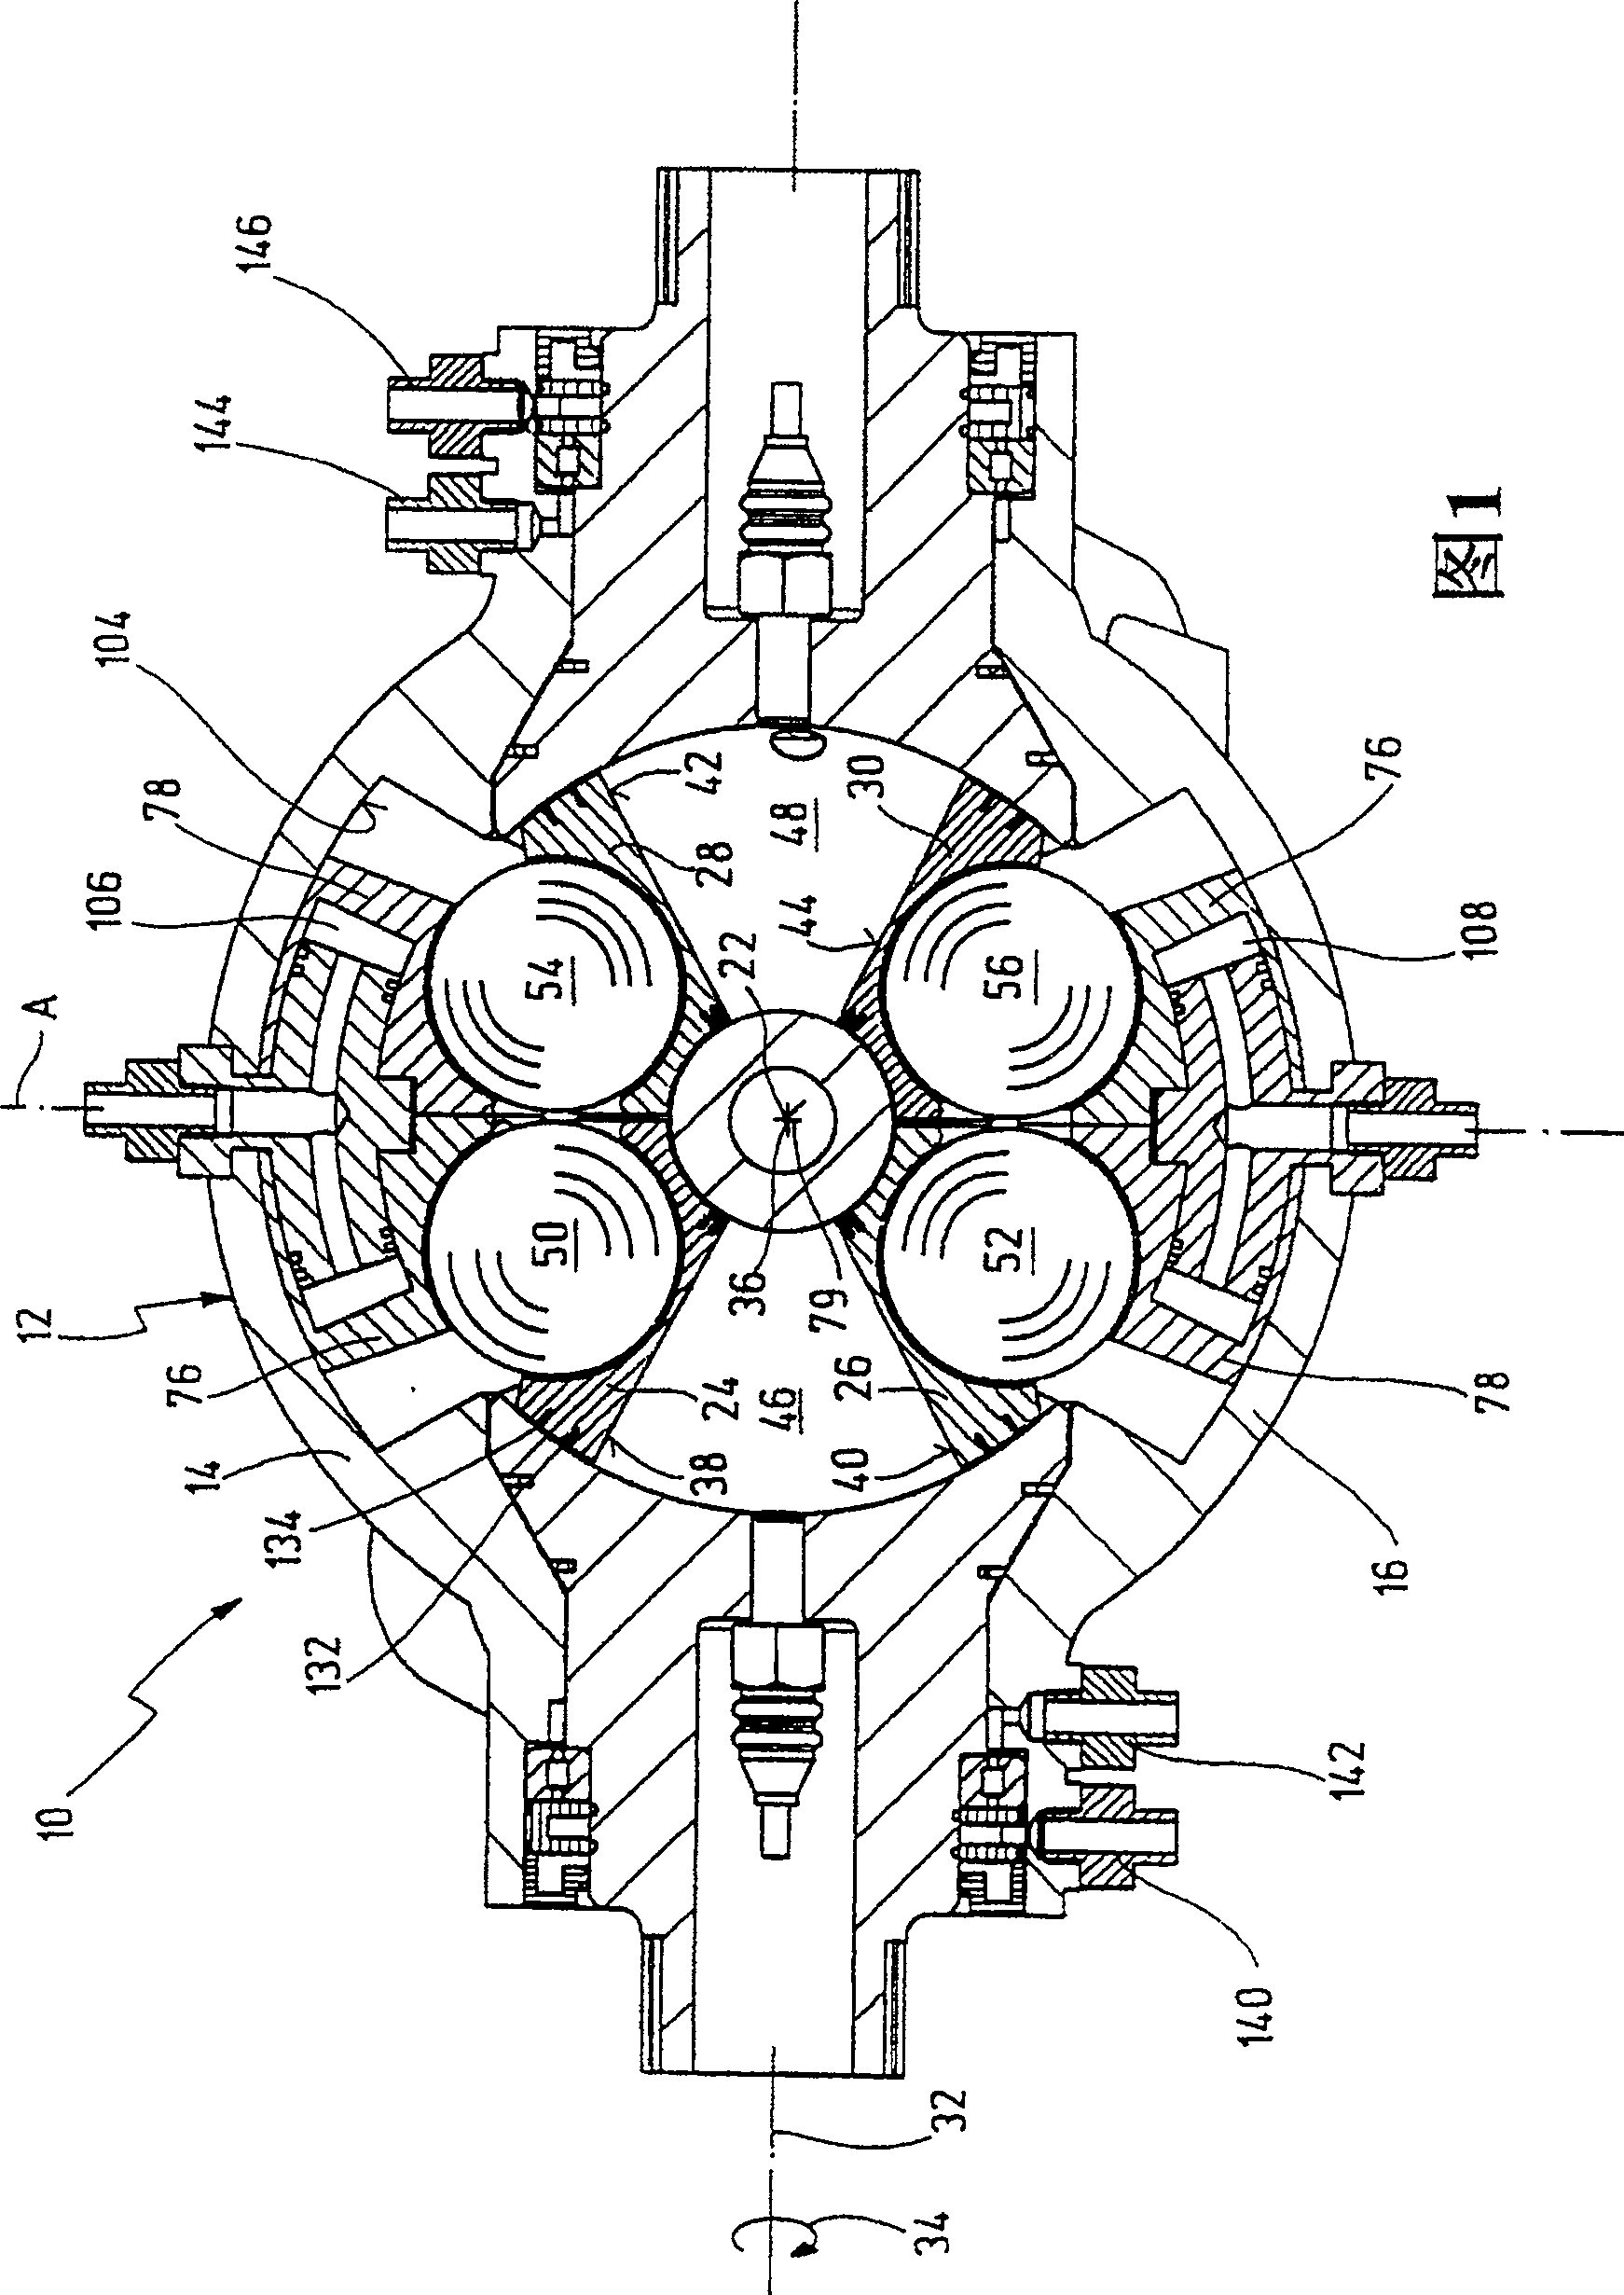 Rotary-piston engine